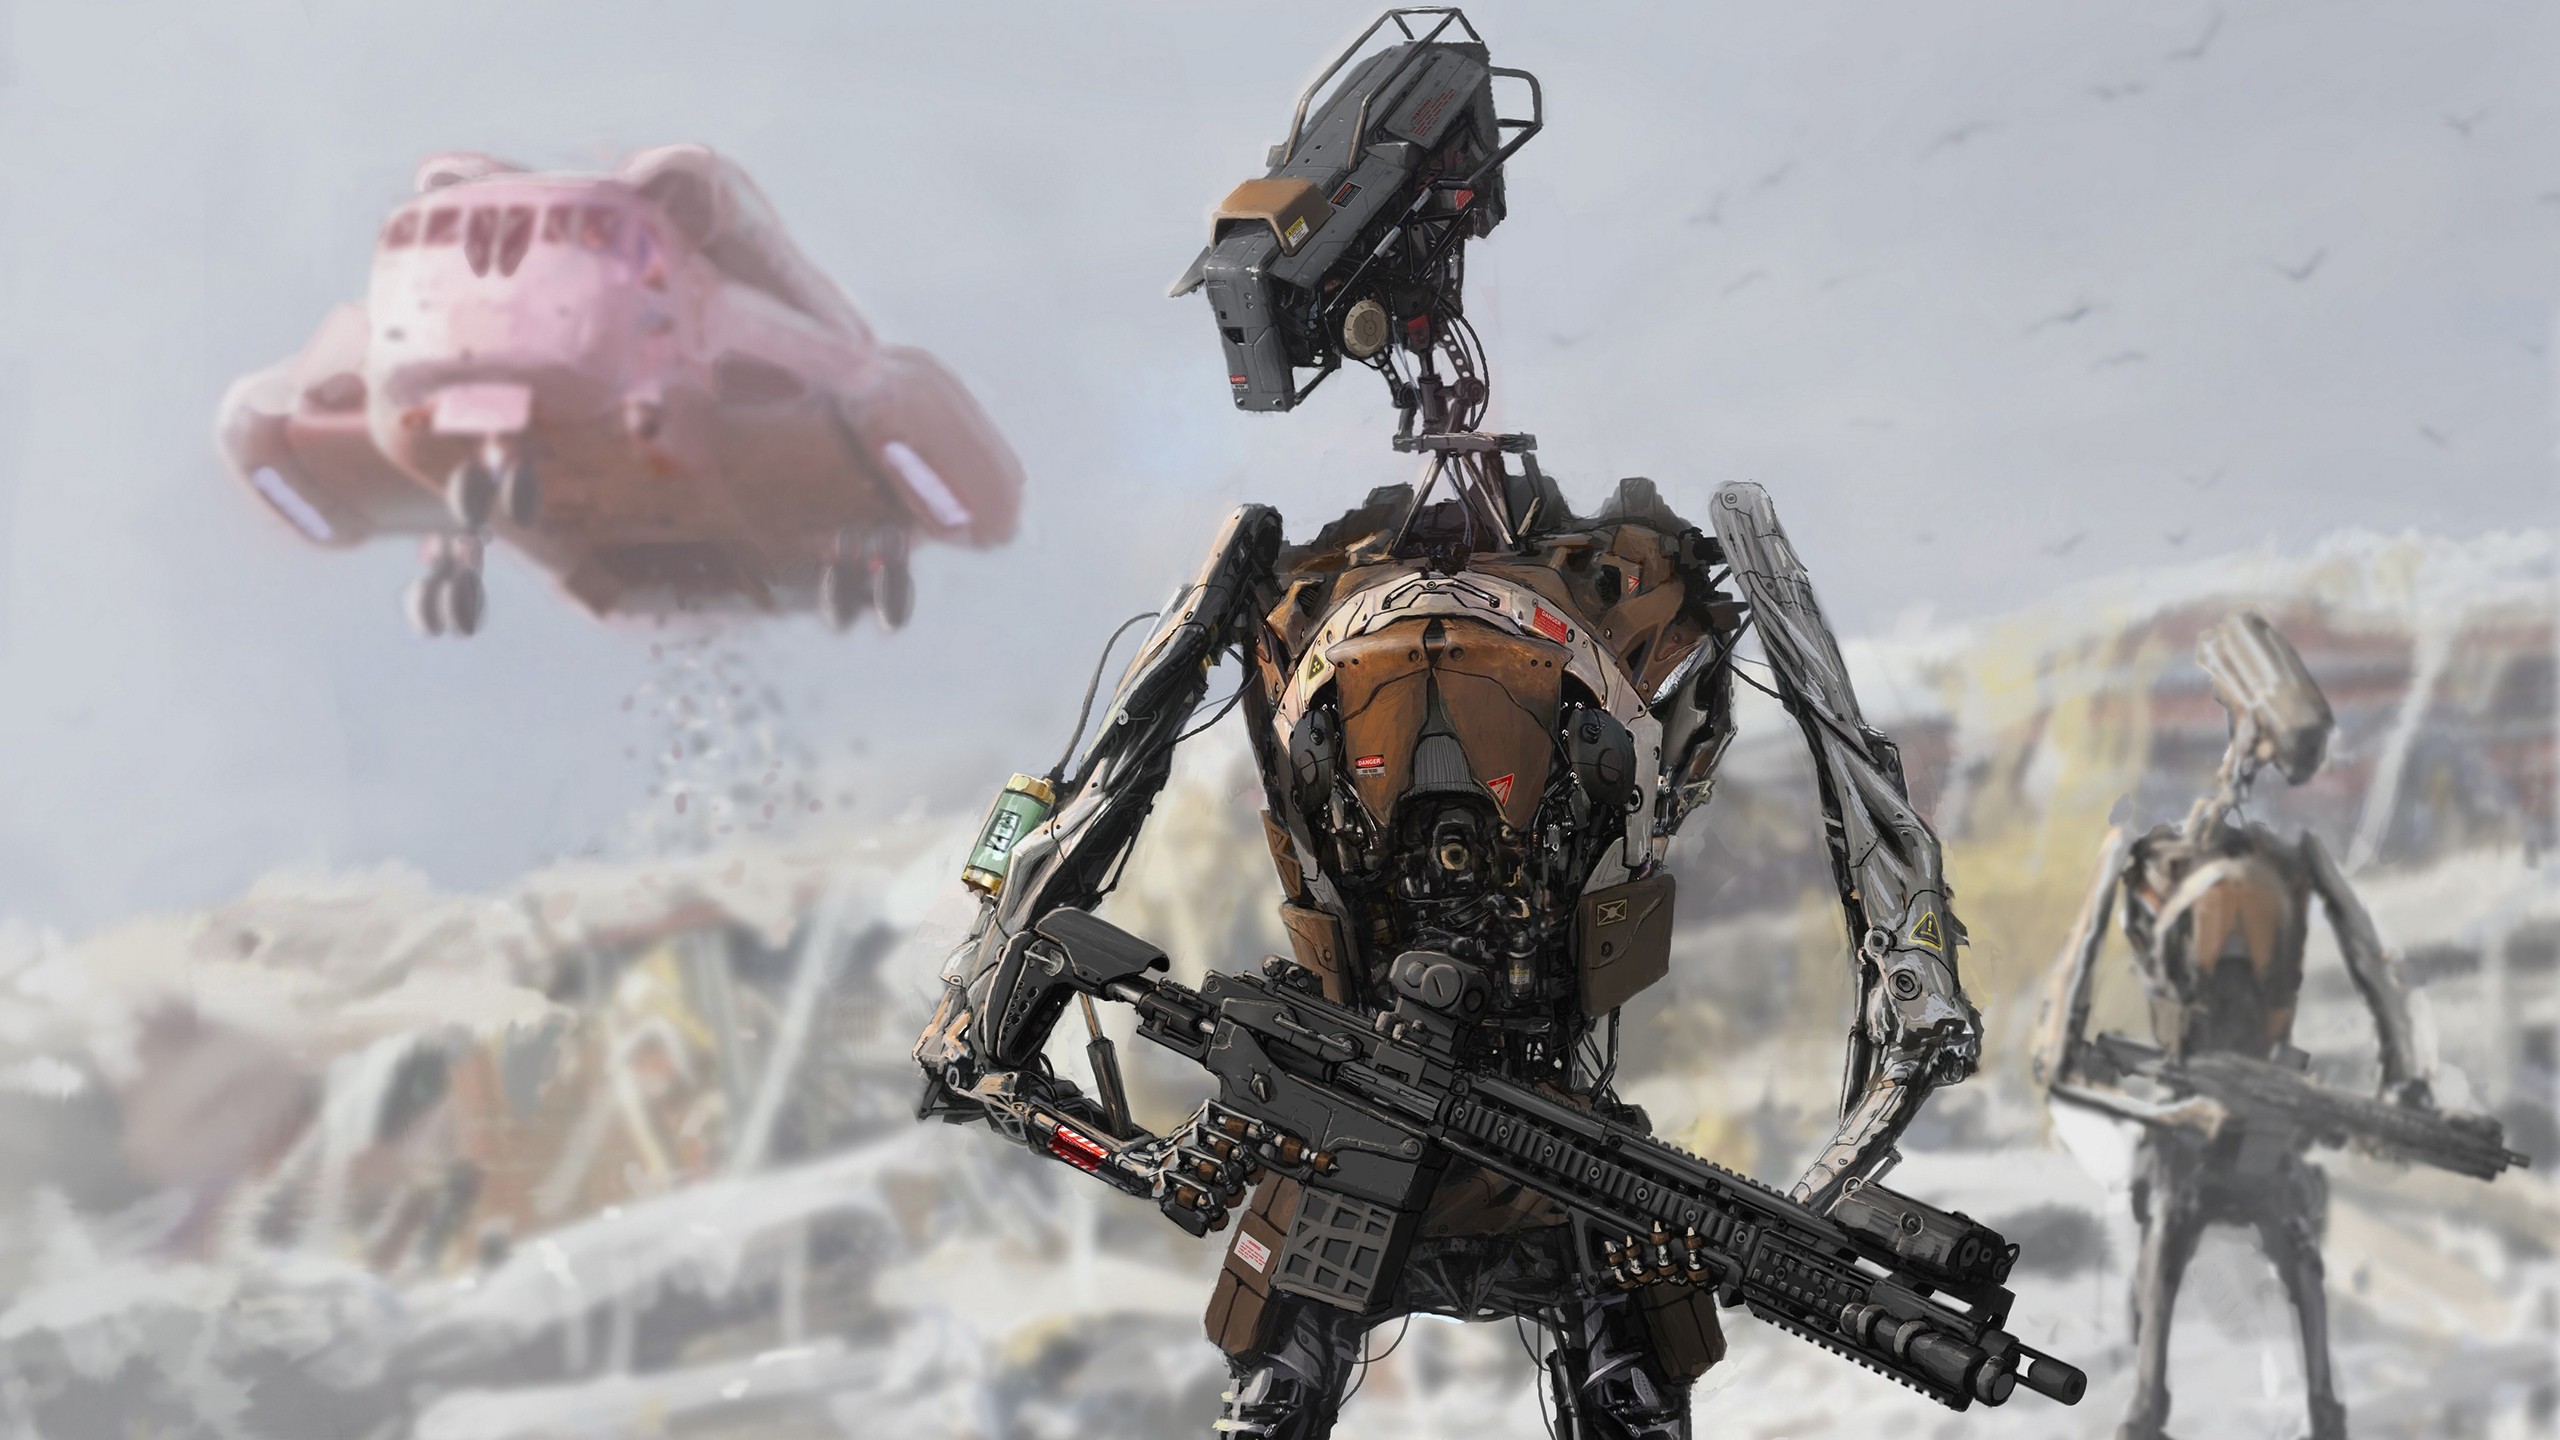 General 2560x1440 science fiction robot CGI digital art machine weapon